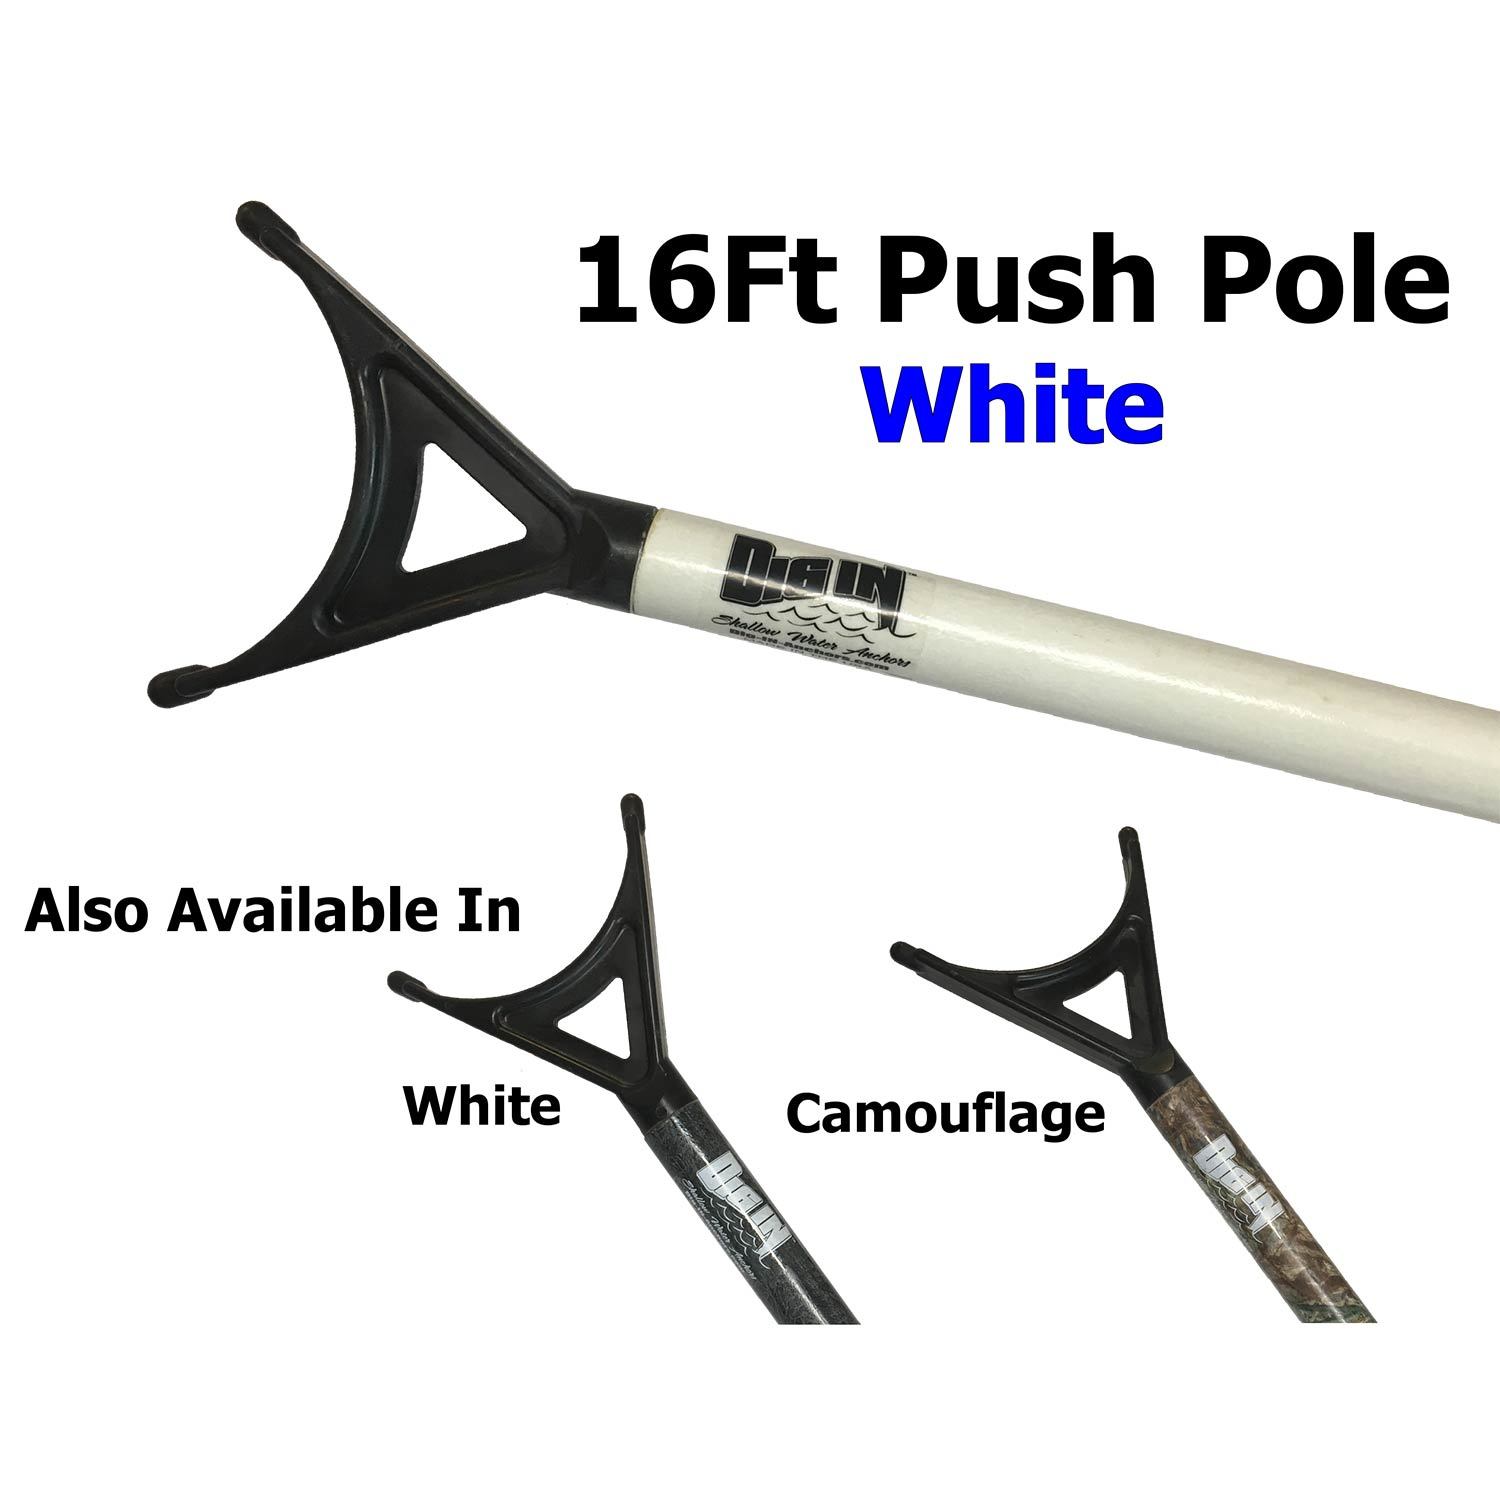 16' Fiberglass Push Pole with Extra Tough Anchoring Tip